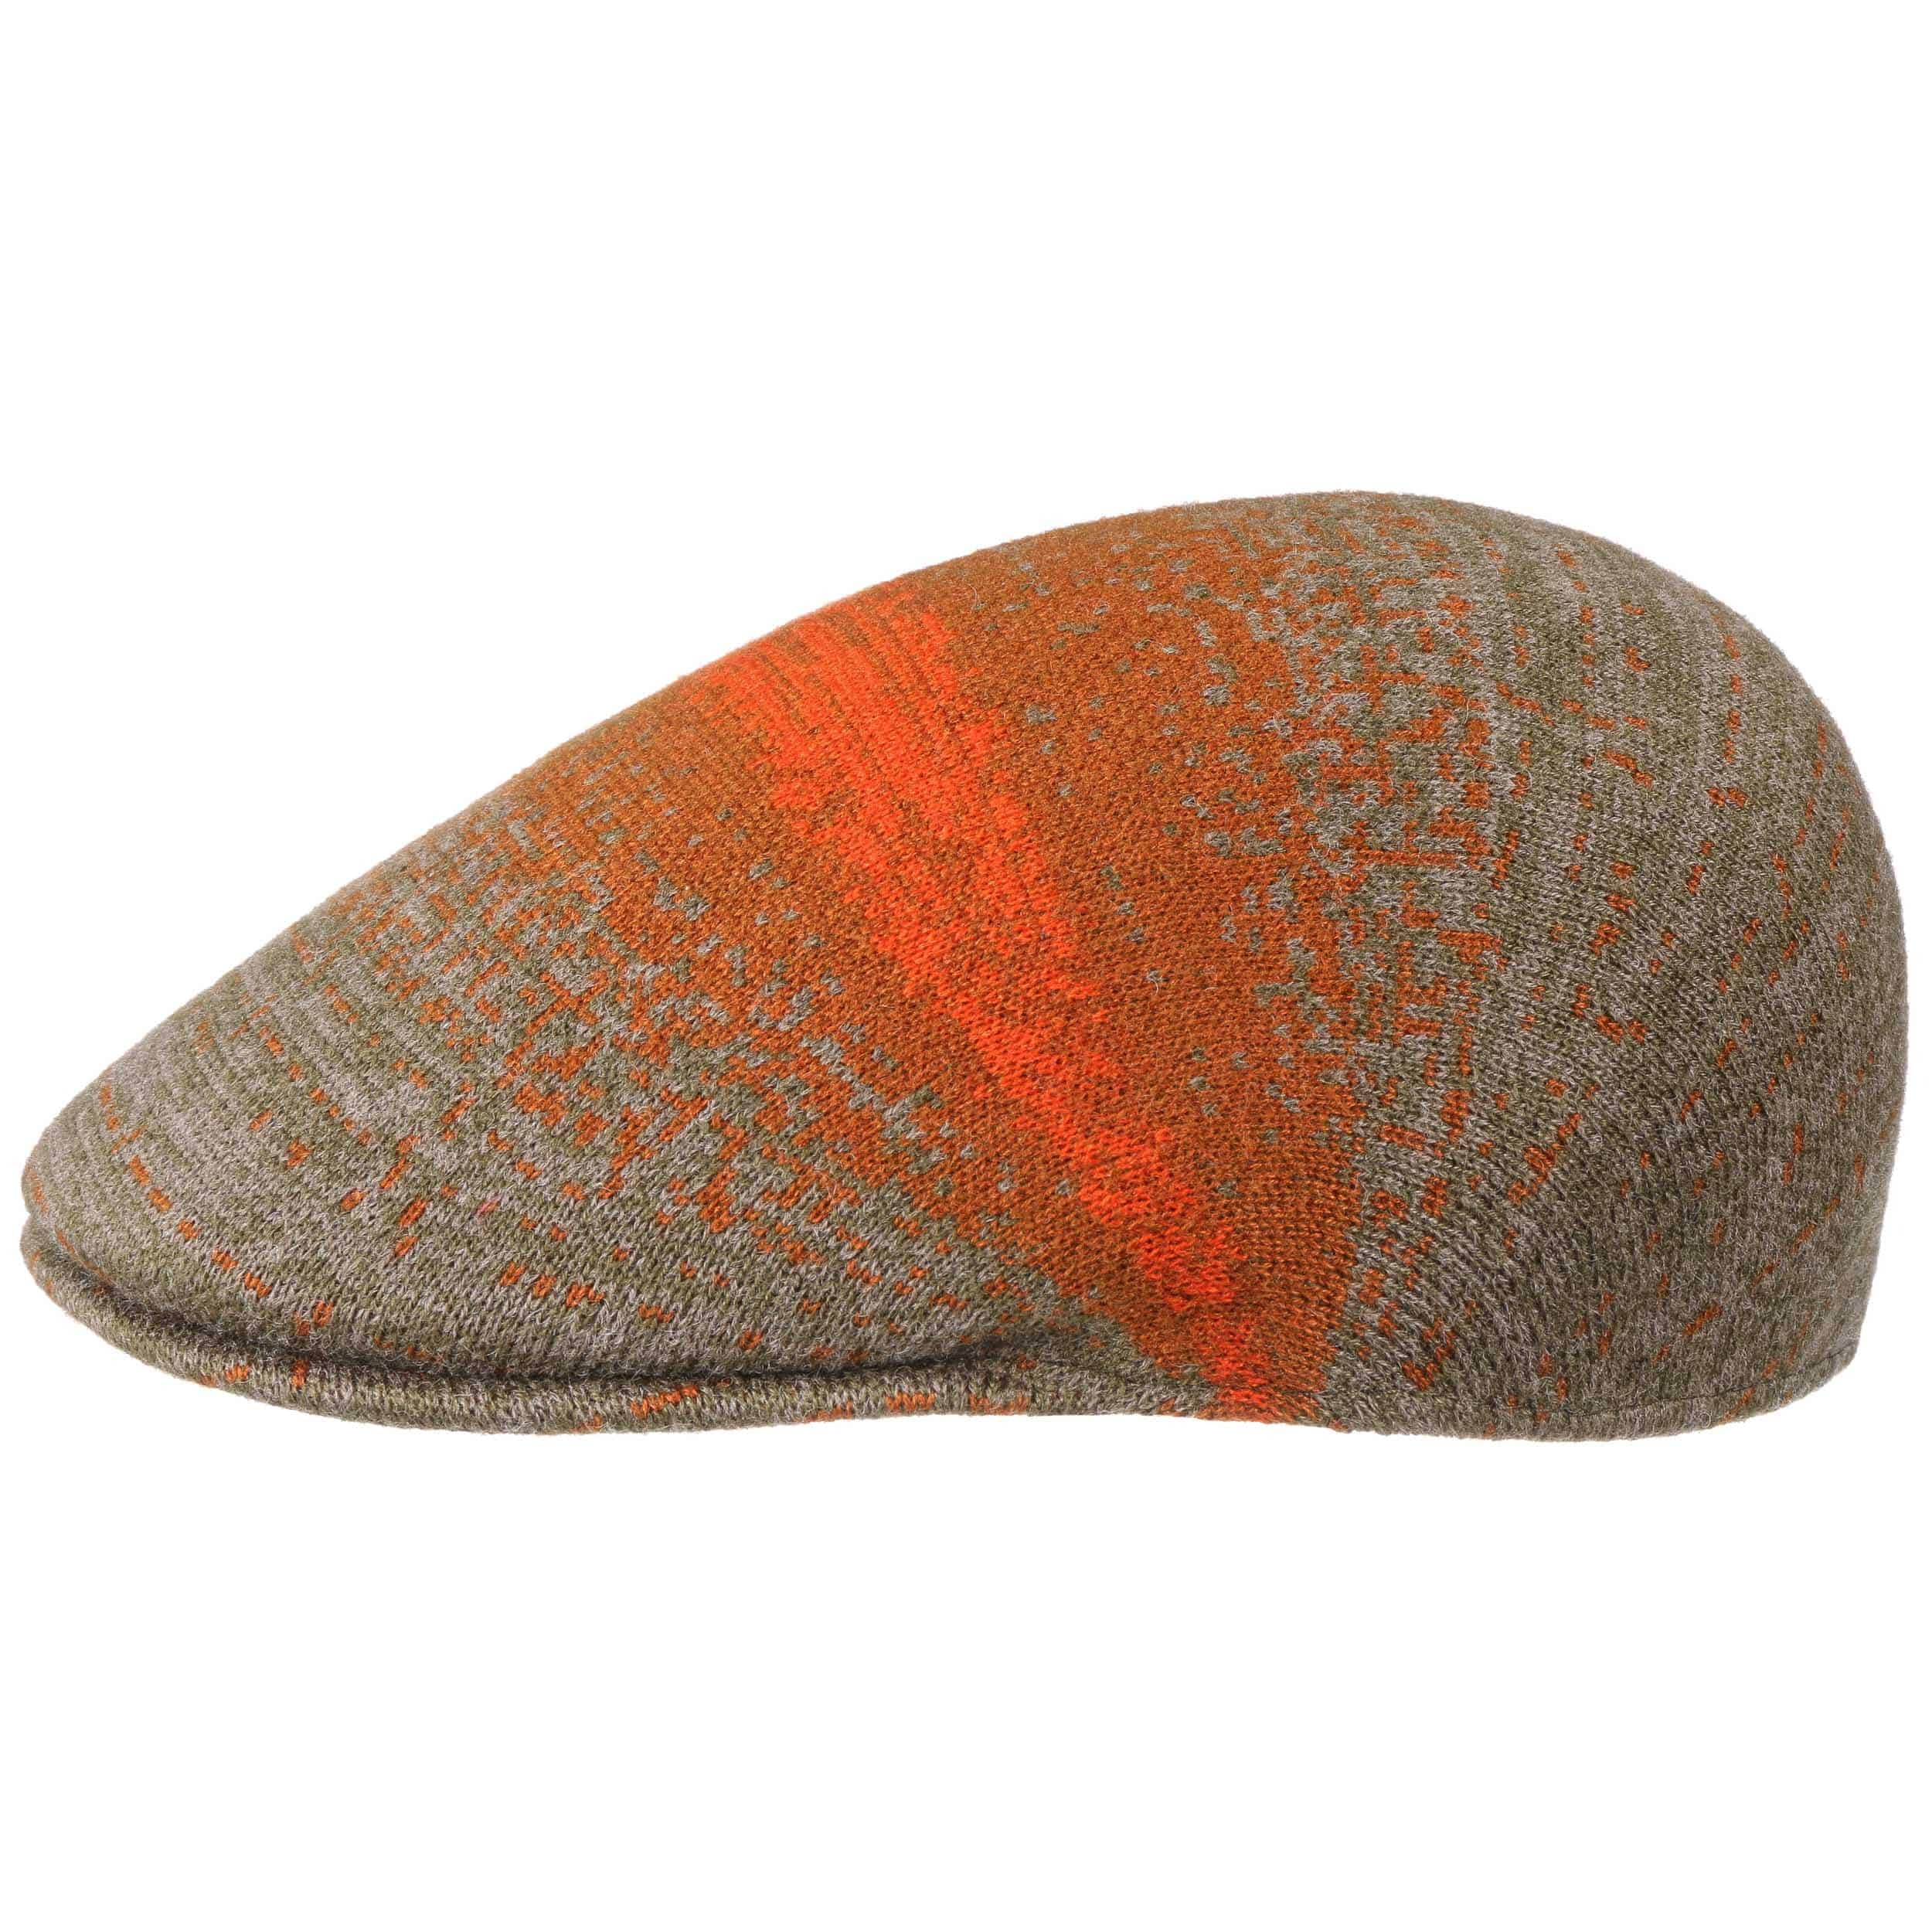 Stripe 507 Kangol Wool Flat Cap, 55% OFF